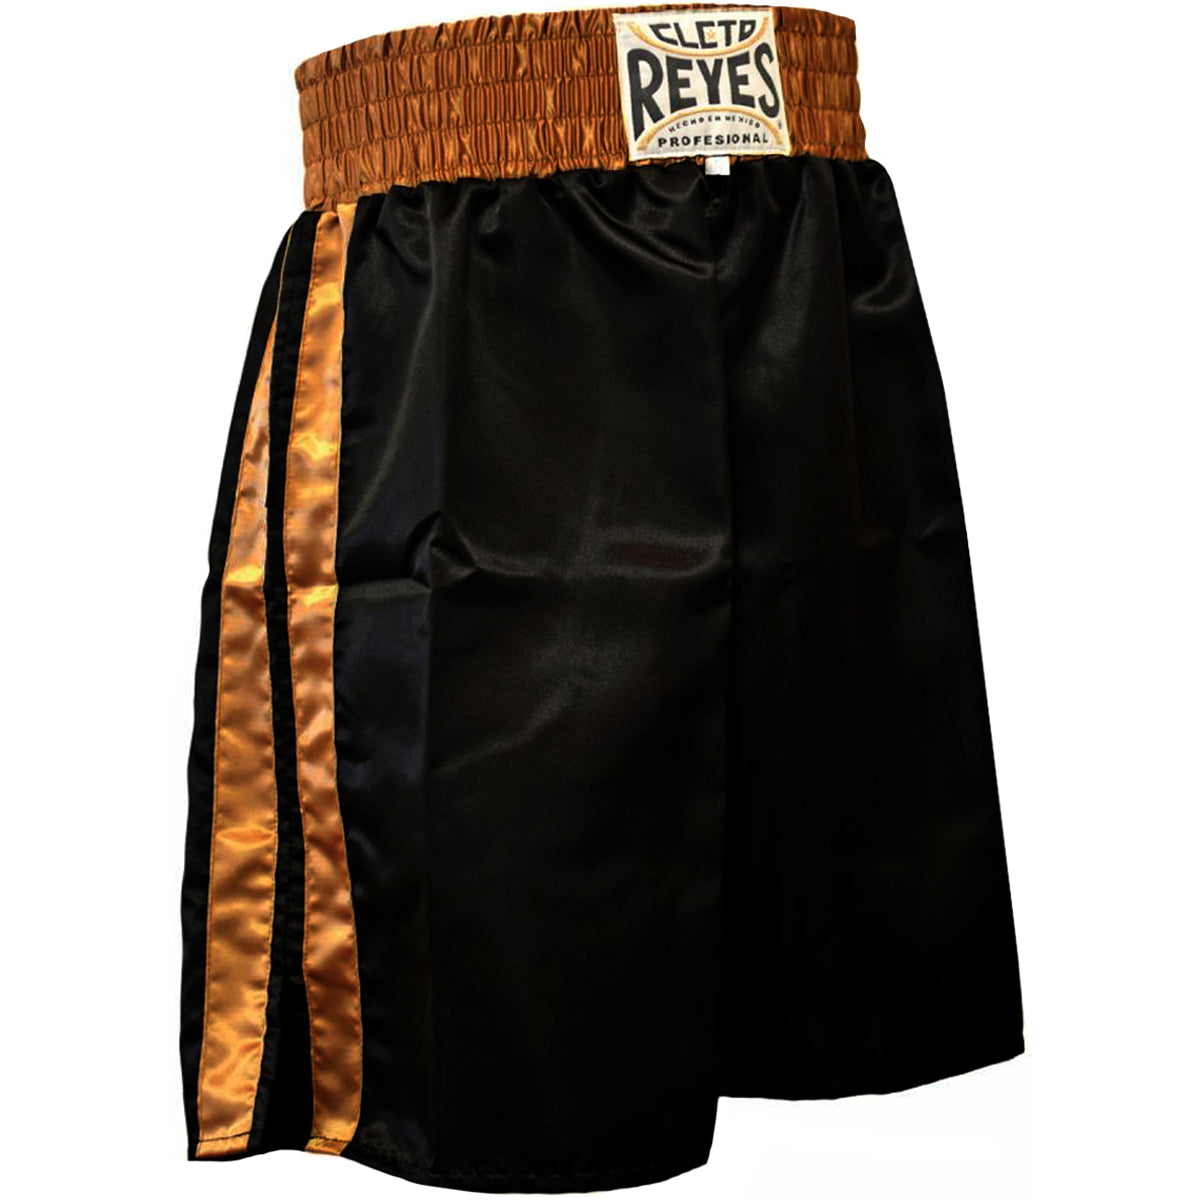 Cleto Reyes Satin Classic Boxing Trunks - XL (44") - Black/Gold Cleto Reyes